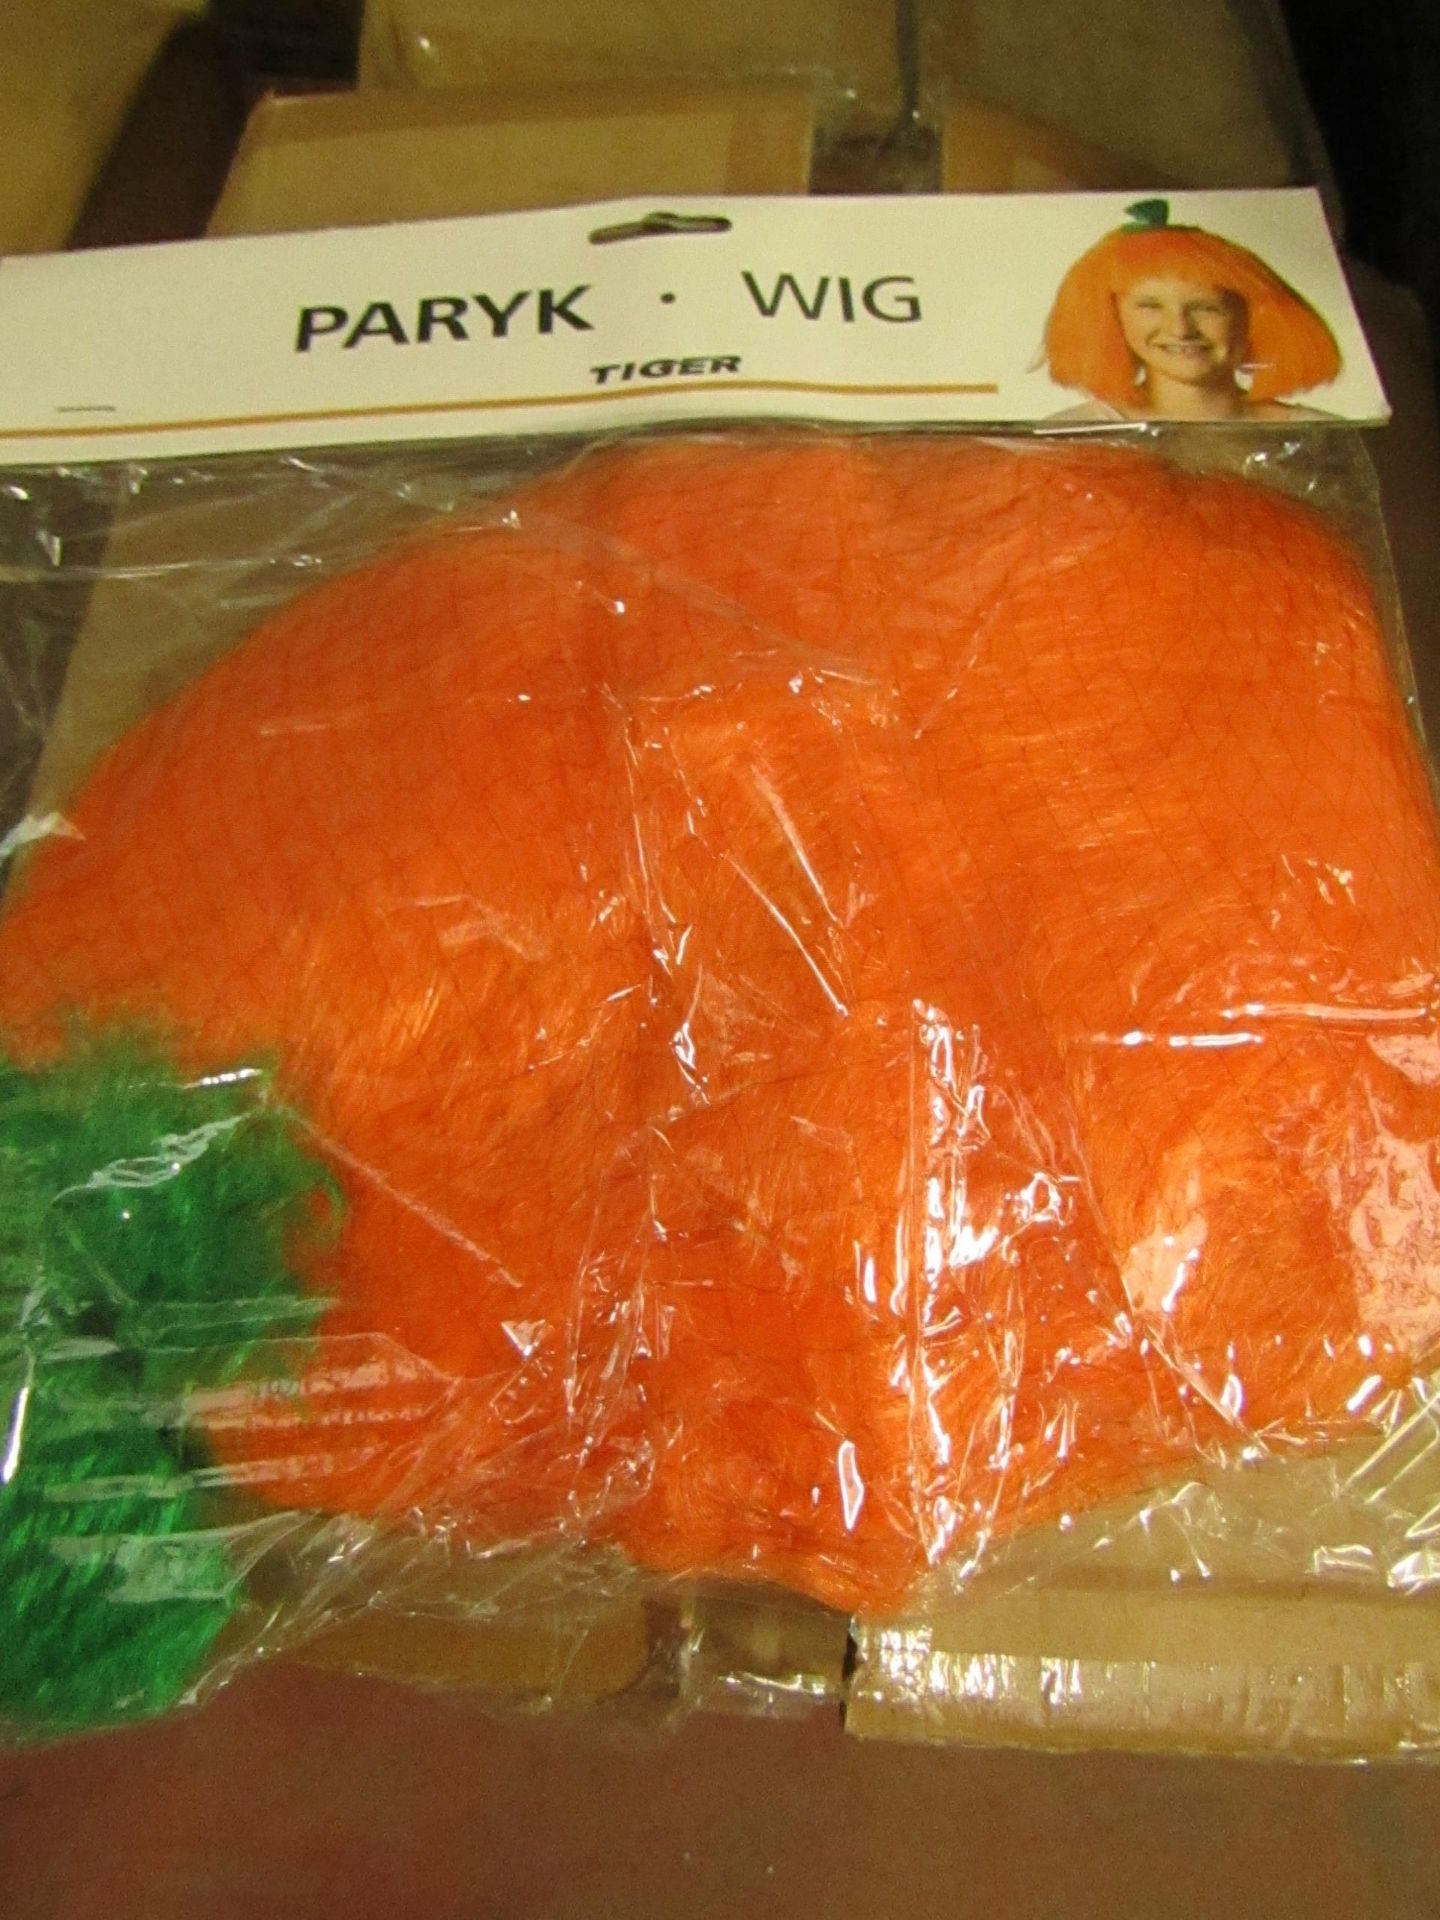 10x Tiger Paryk Wig (Pumpkin Design) - New & Packaged